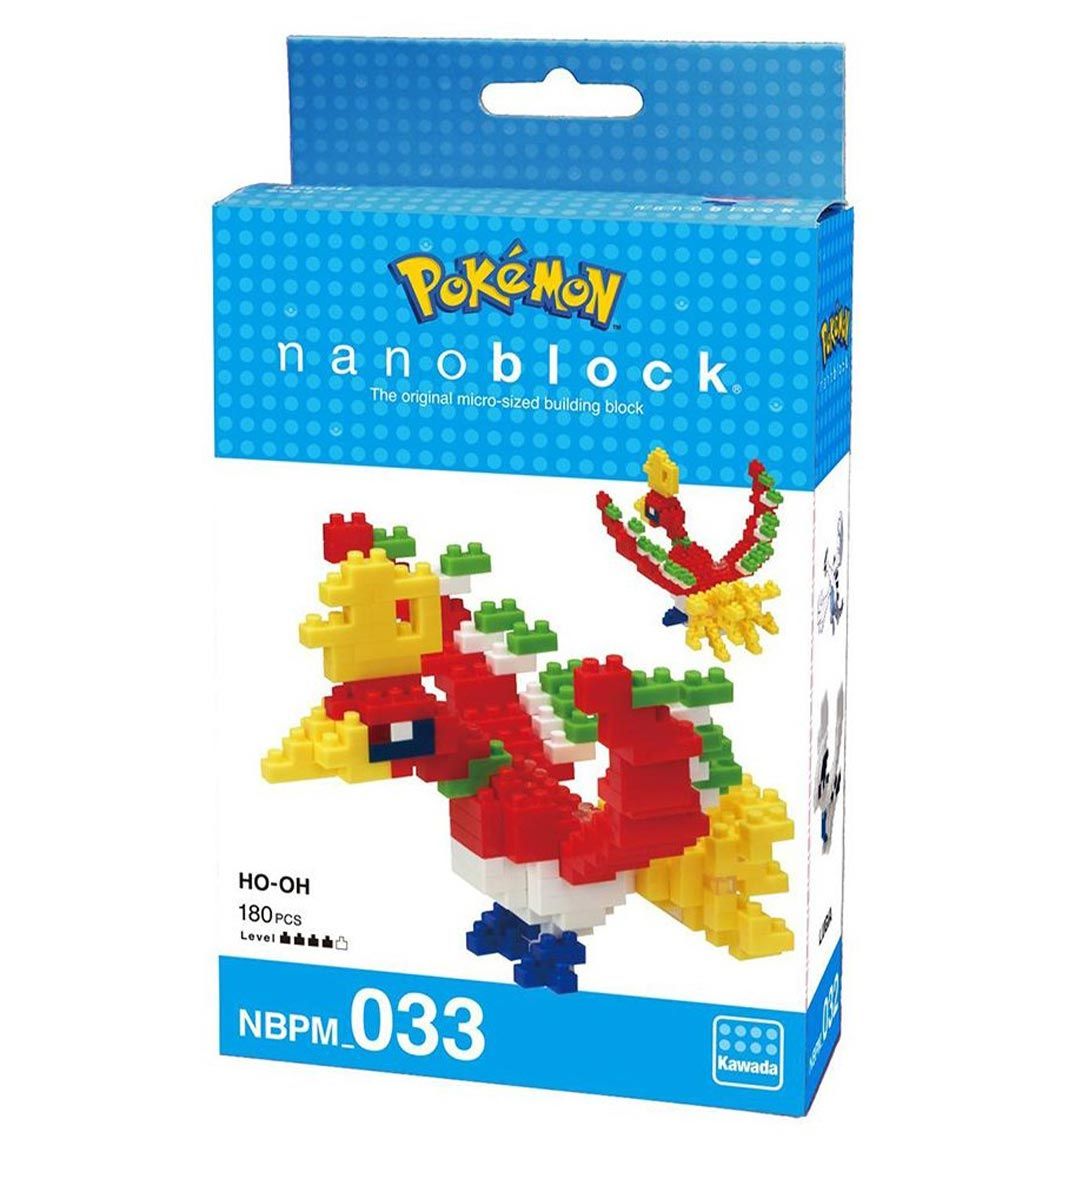 Pokémon x Nanoblock - Ho-Oh - NBPM 033